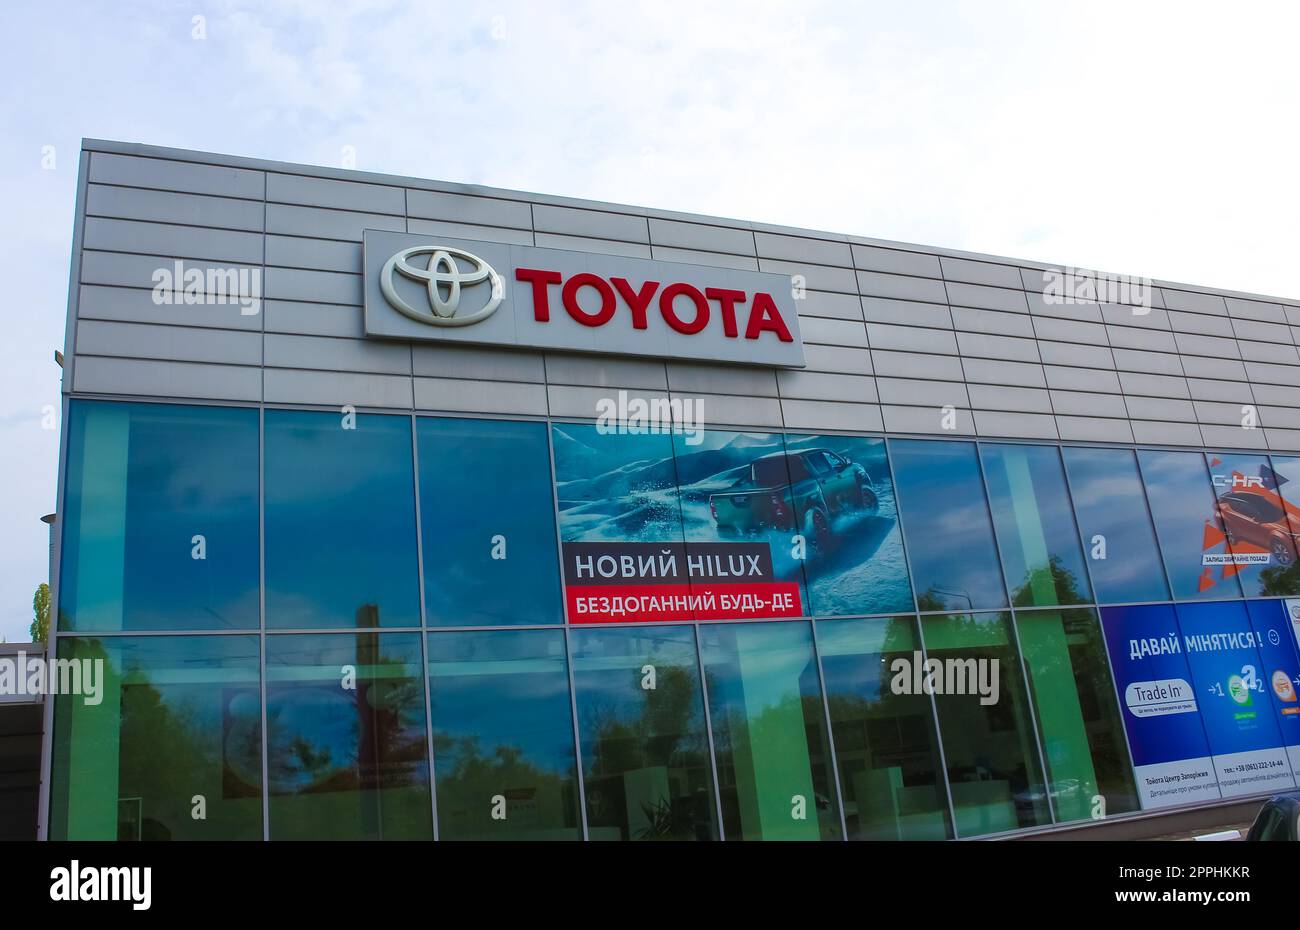 Kyiv, Ukraine - July 29, 2020: The Toyota salon or shop at Kyiv, Ukraine Stock Photo